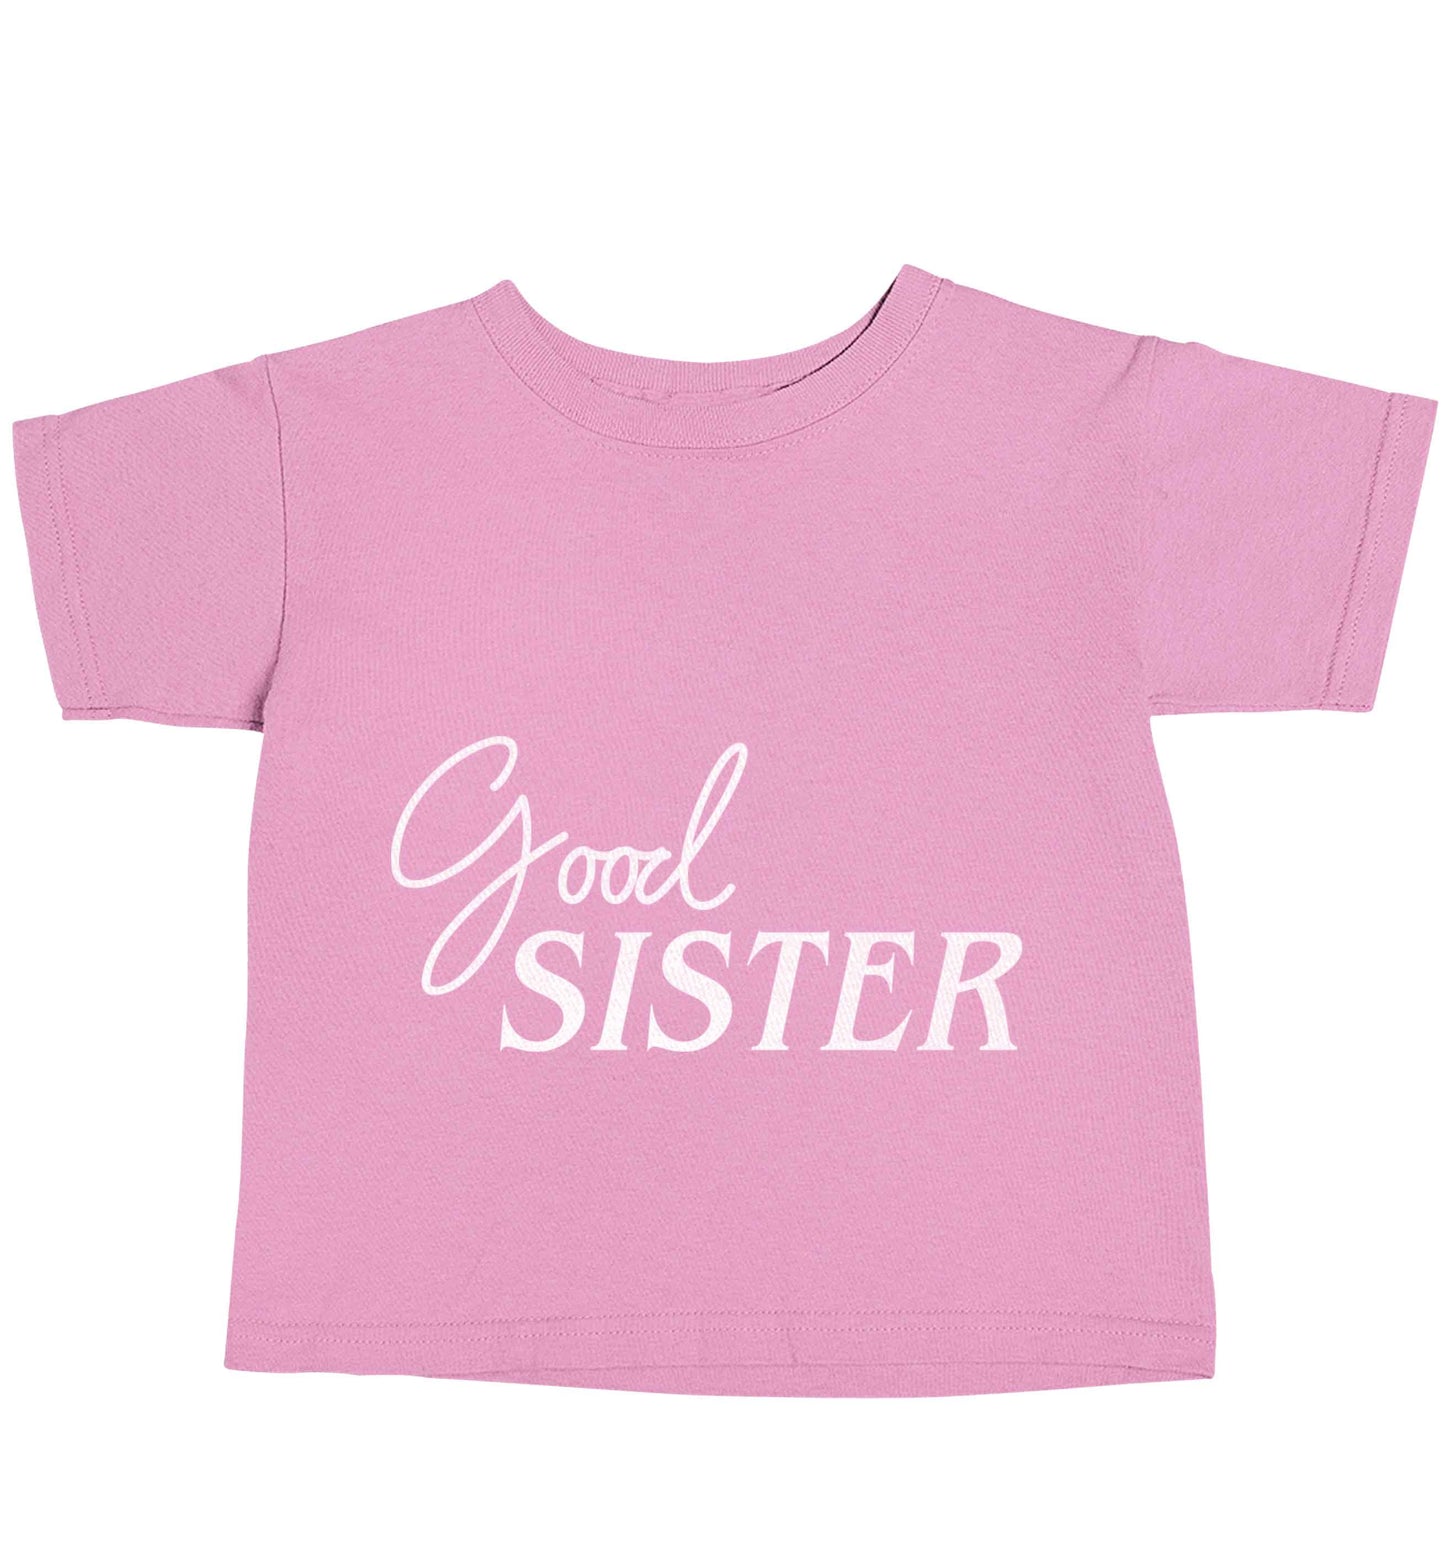 Good sister light pink baby toddler Tshirt 2 Years